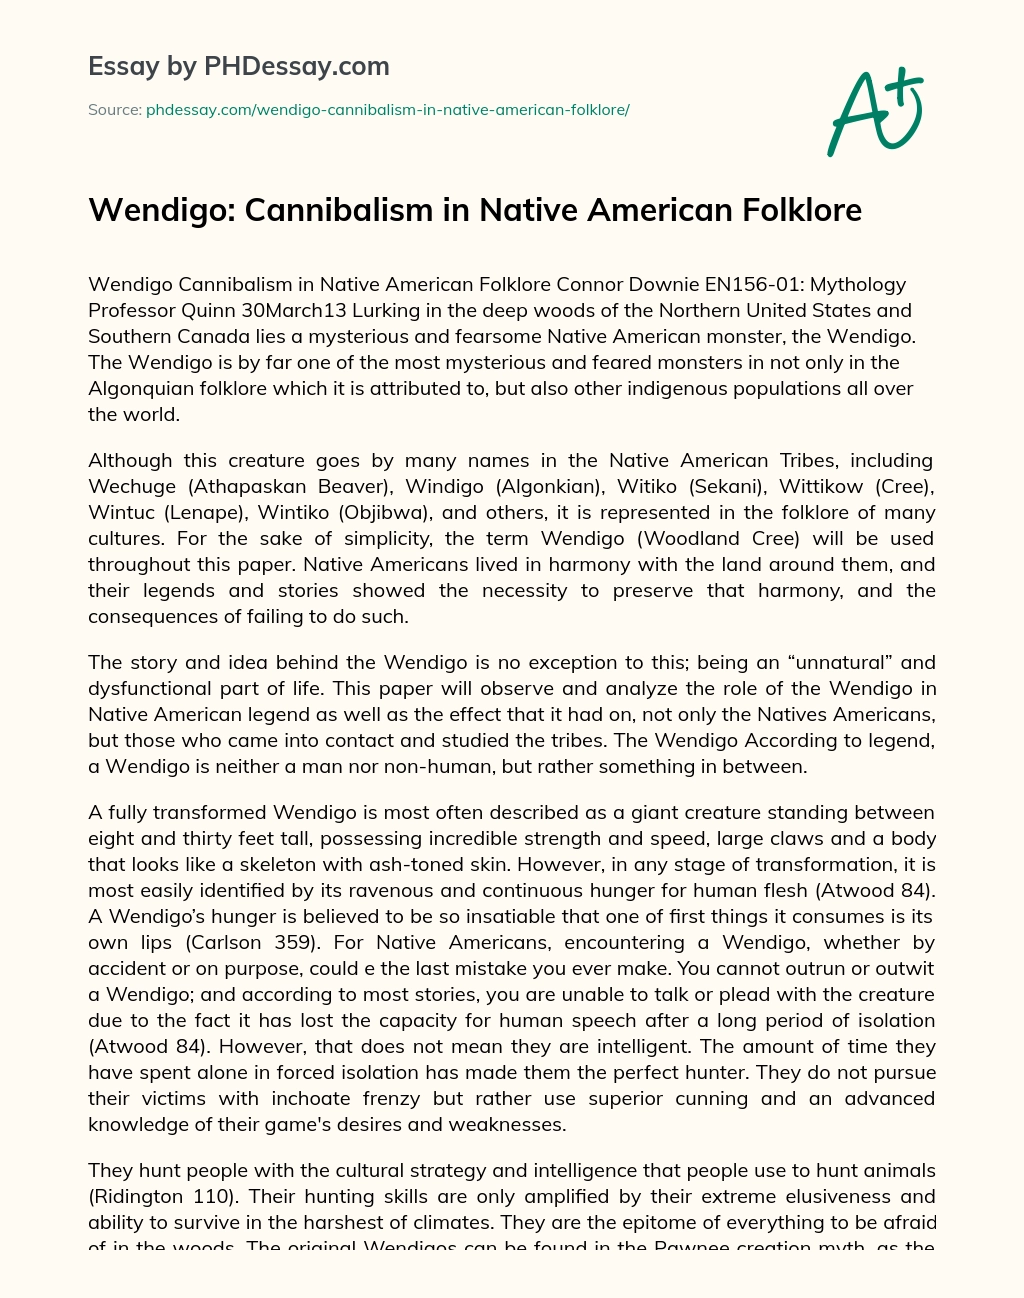 Wendigo: Cannibalism in Native American Folklore essay